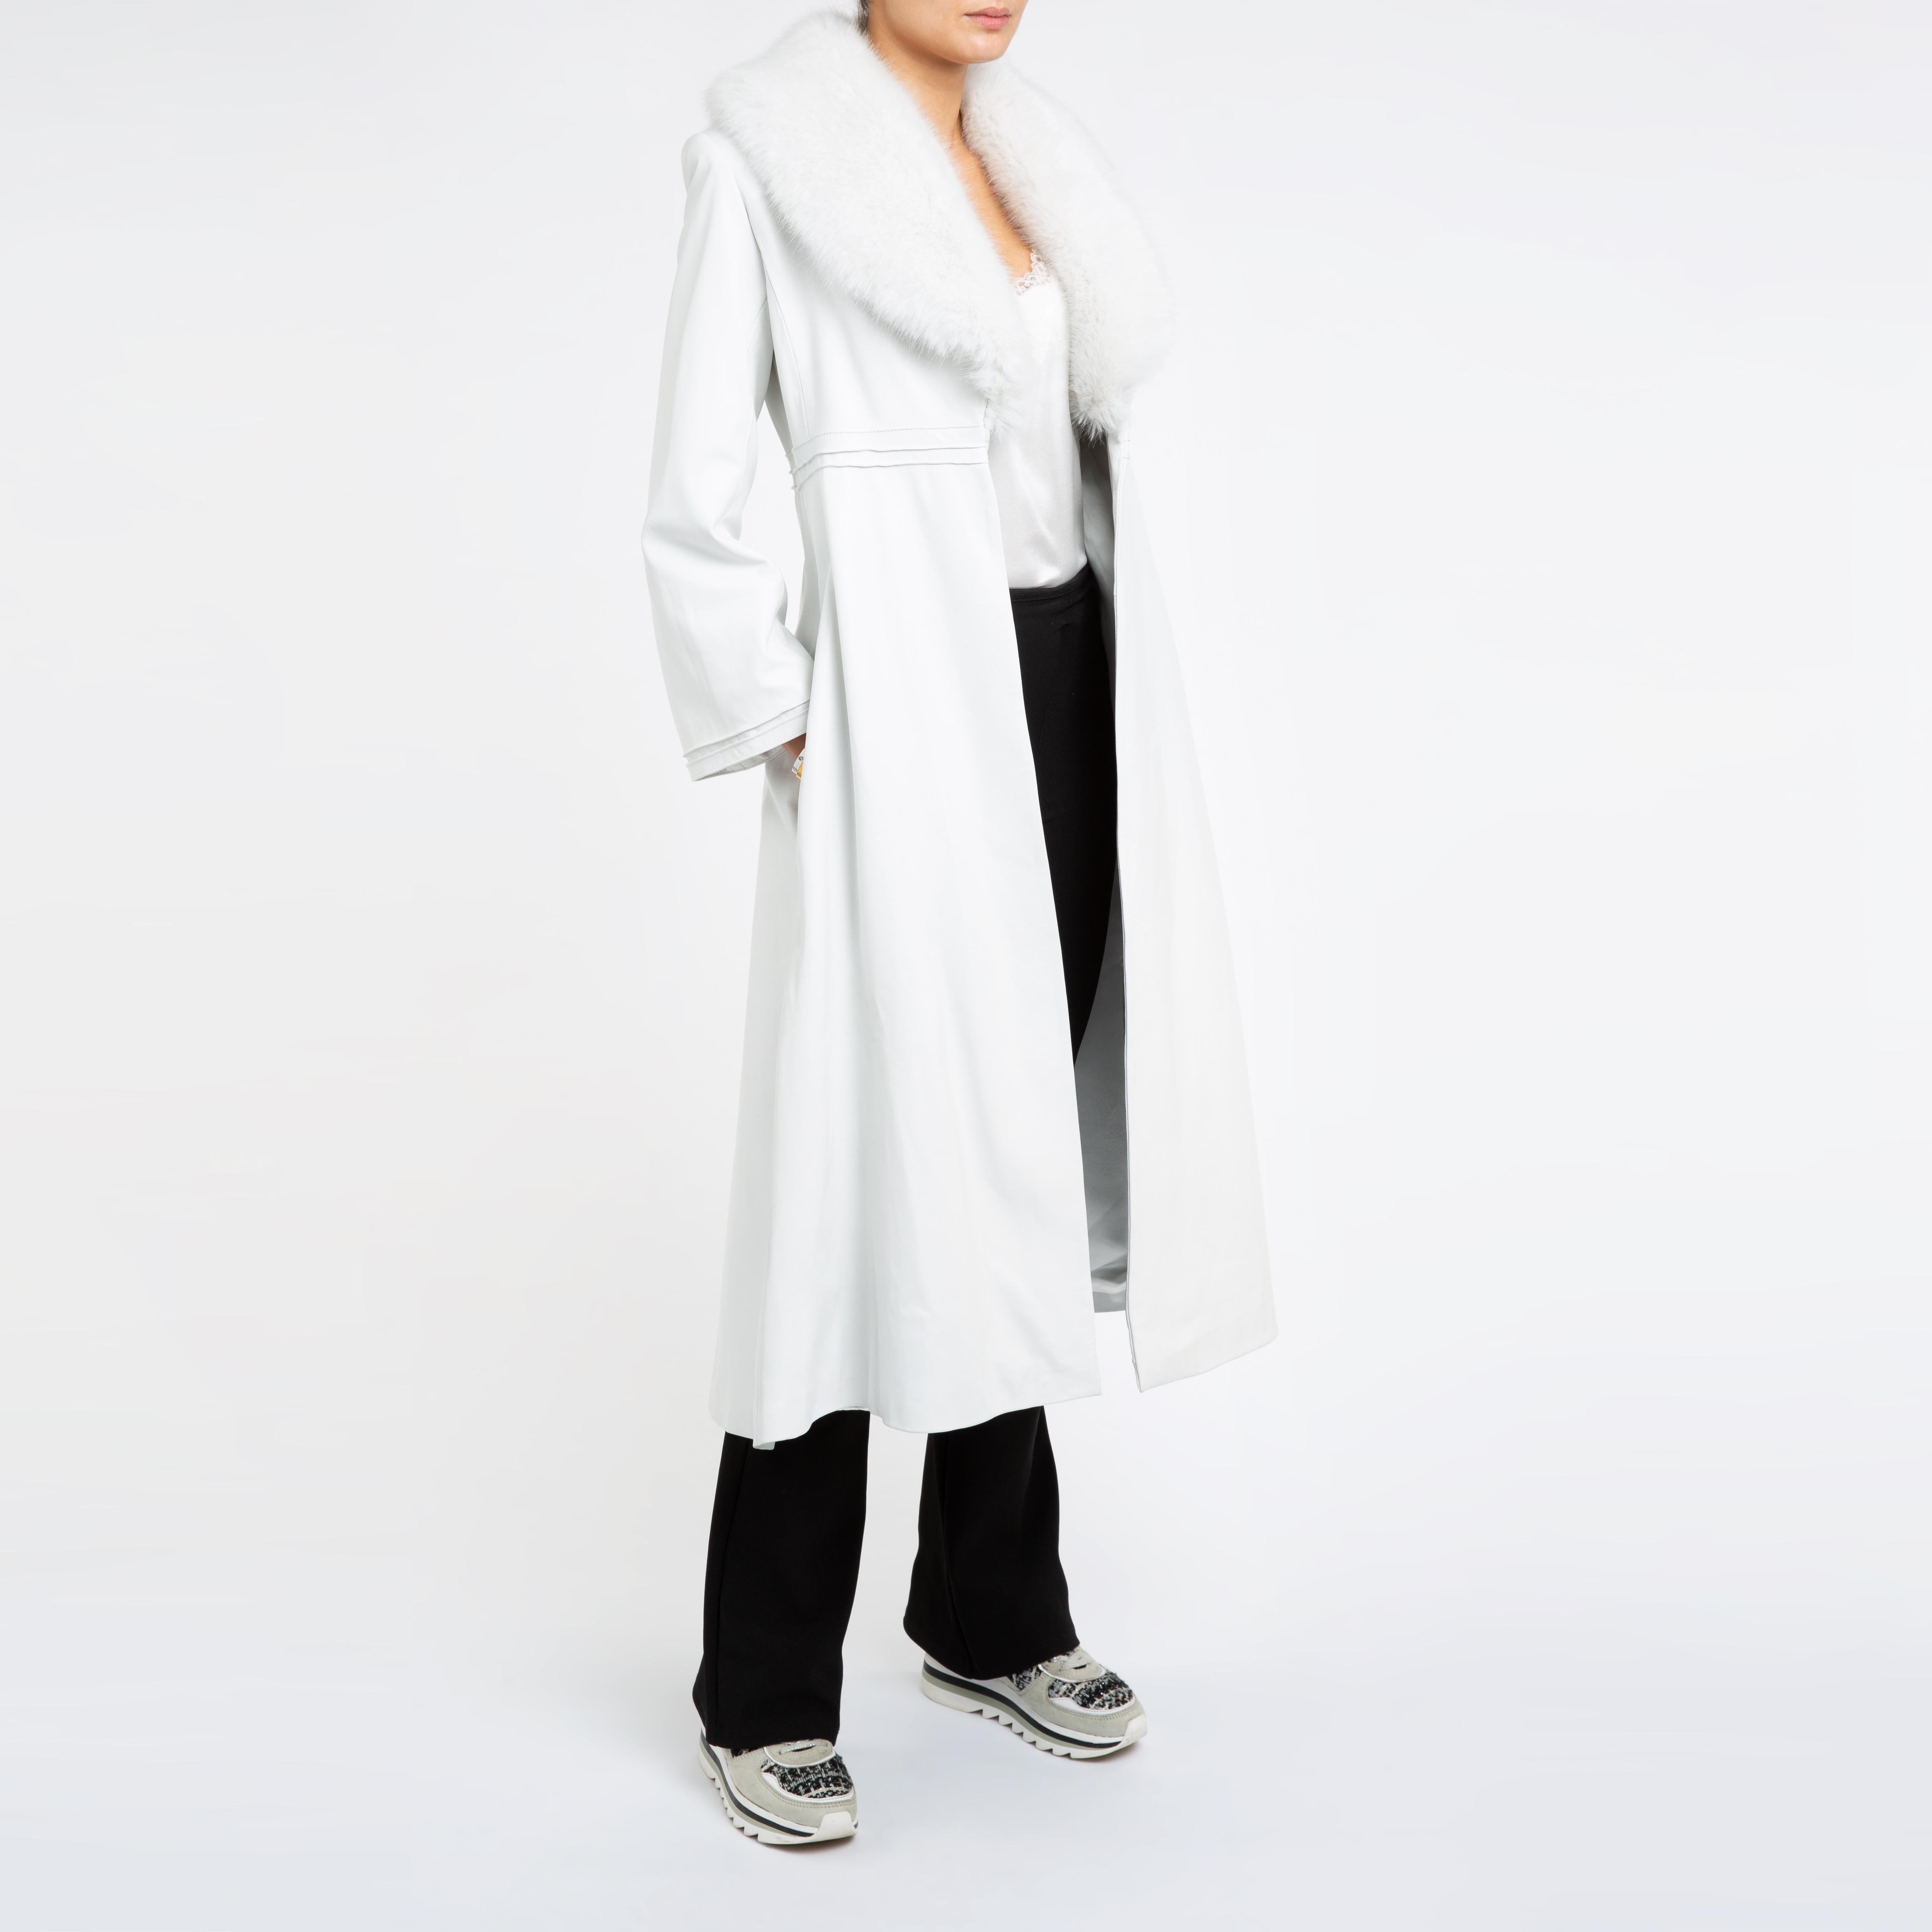 Verheyen London Edward Leather Coat in Aquamarine & White Faux Fur - Size 10 UK  For Sale 4